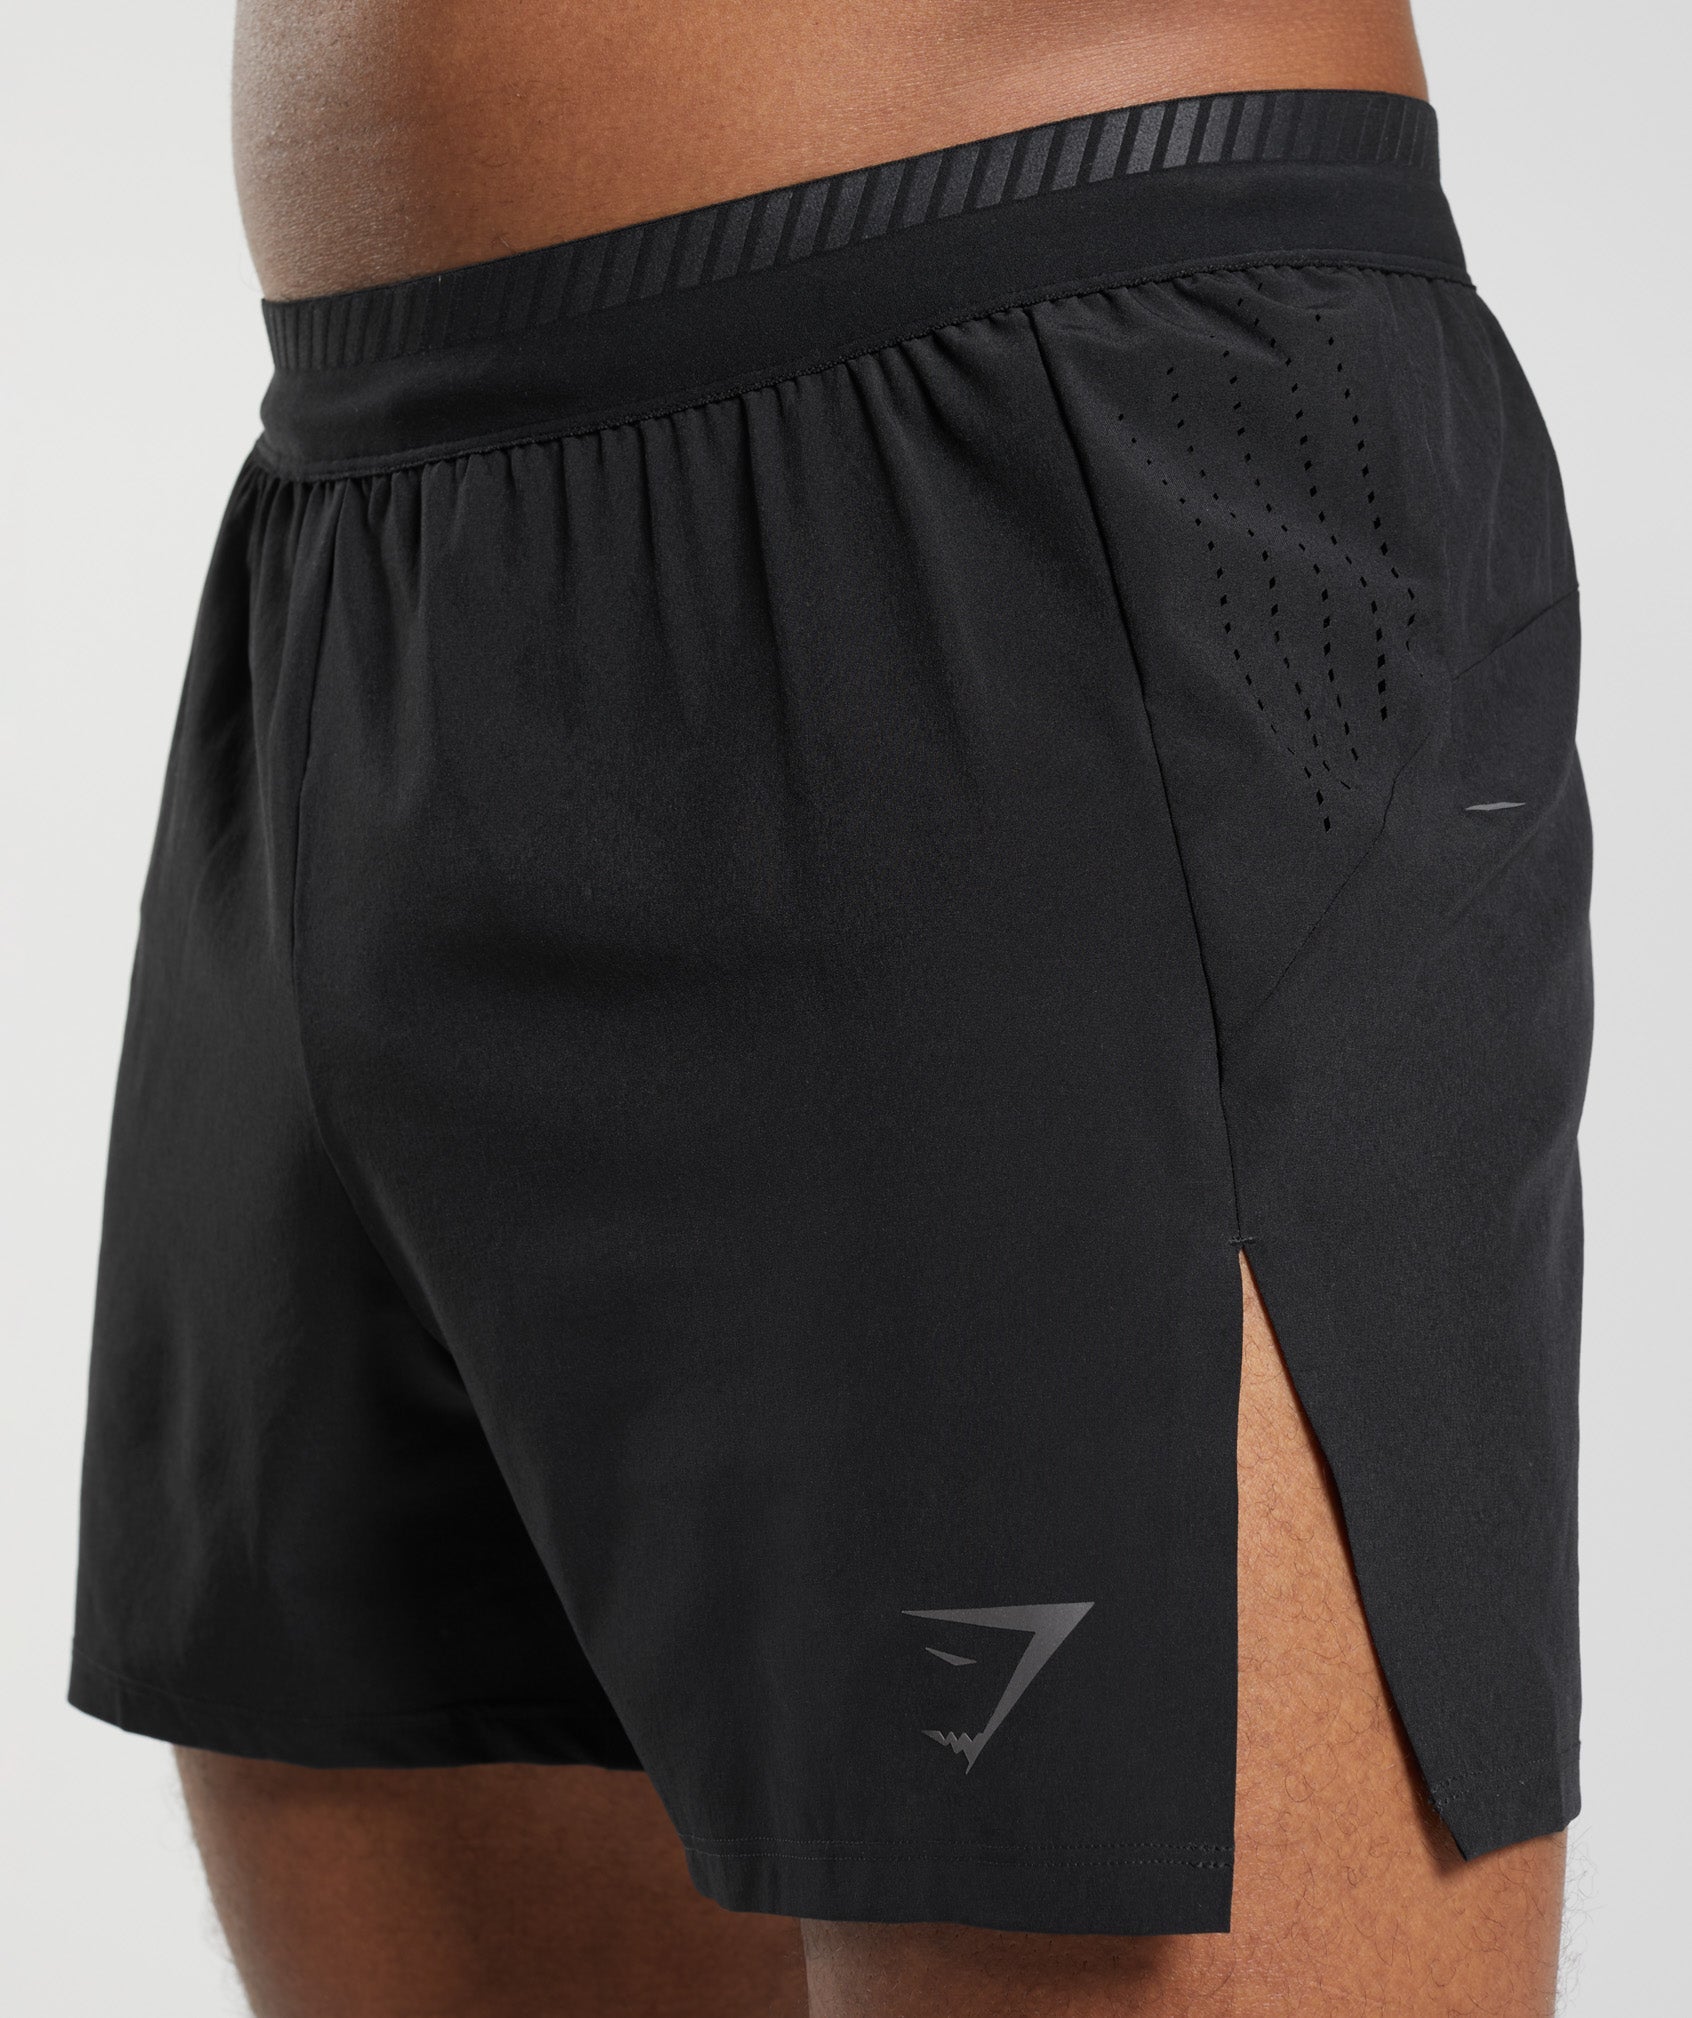 Apex Run 4" Shorts in Black - view 4